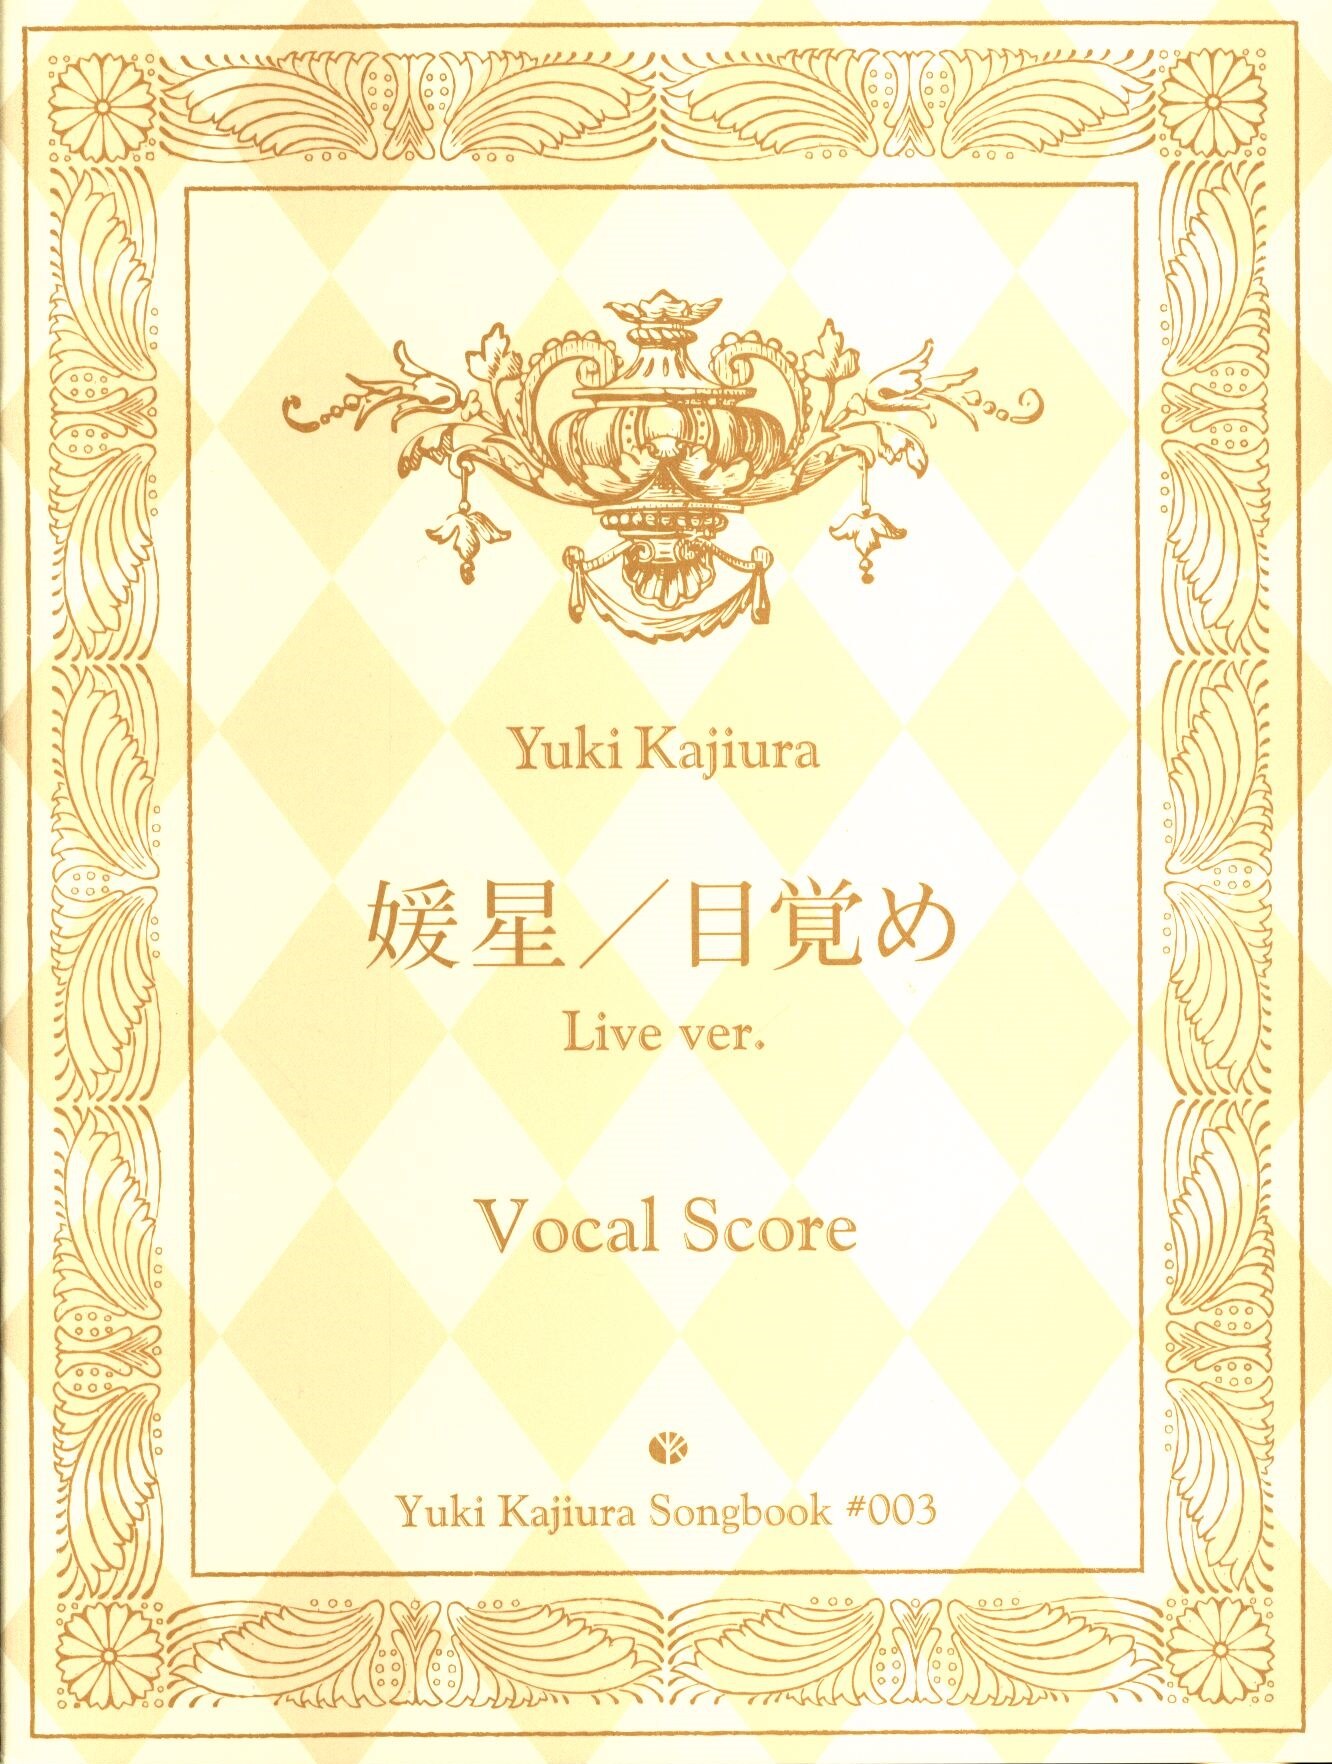 Yuki Kajiura Songbook 梶浦由記 媛星 目覚め Live Ver Vocal Score 003 まんだらけ Mandarake